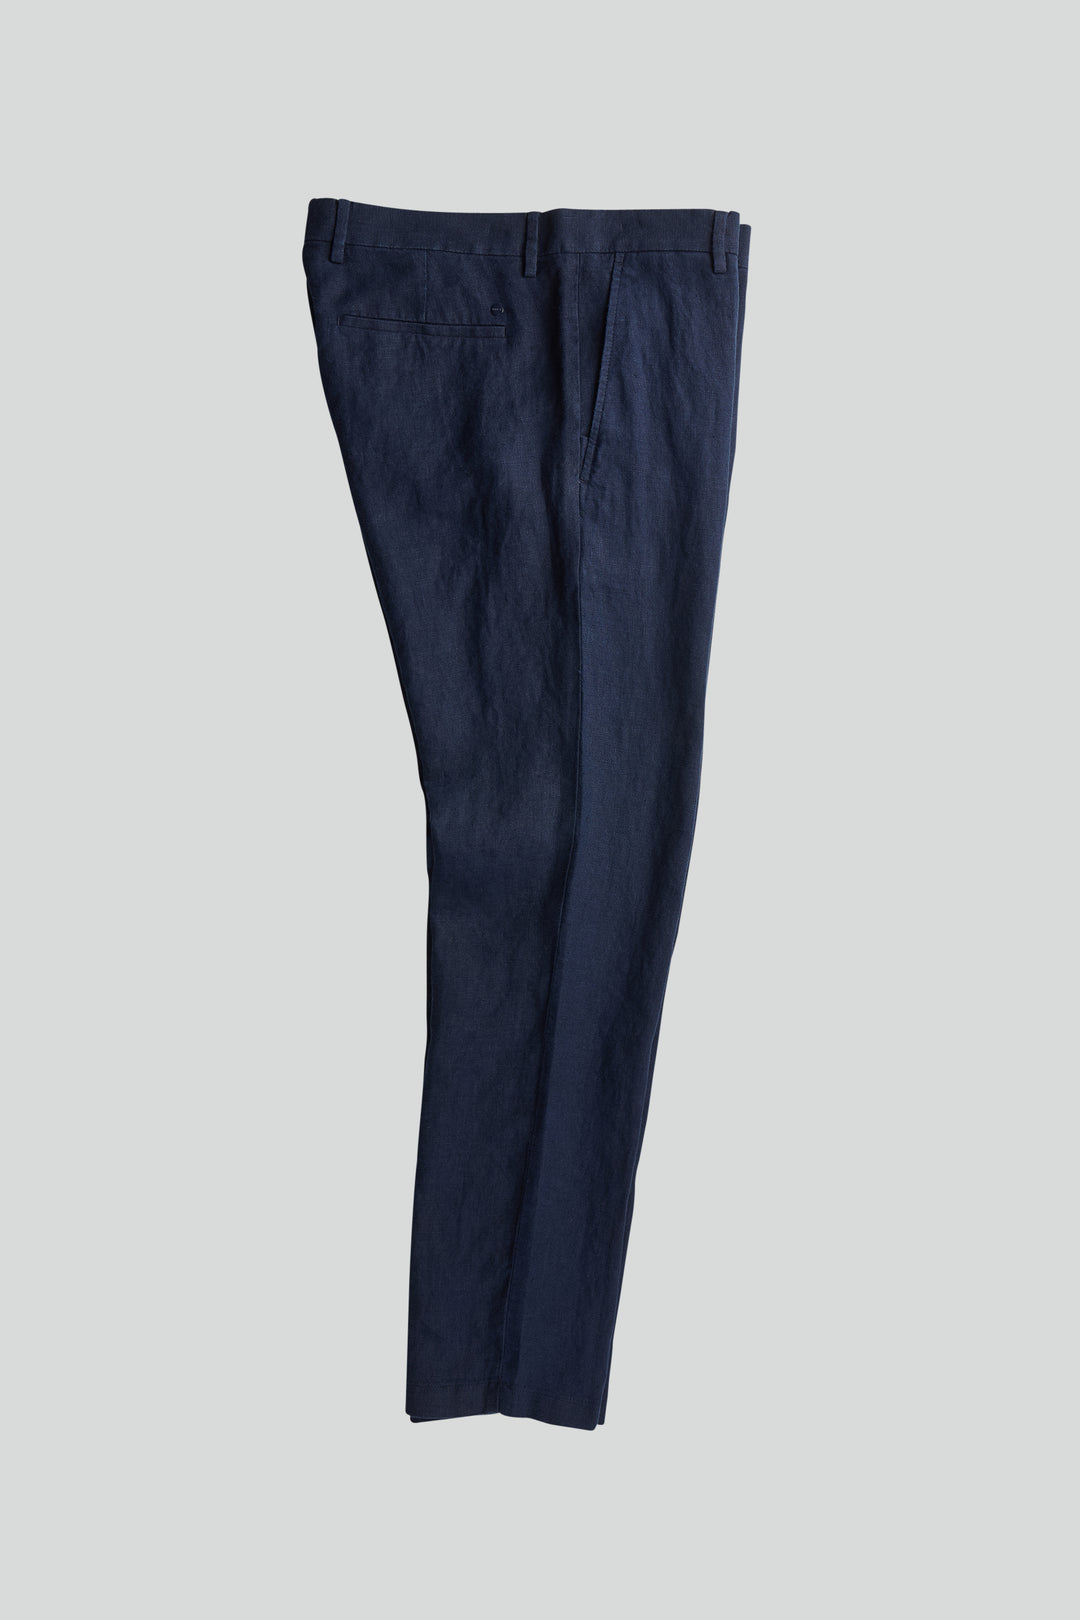 NN07 - Karl 1196 Linen Pants in Navy Blue | Buster McGee